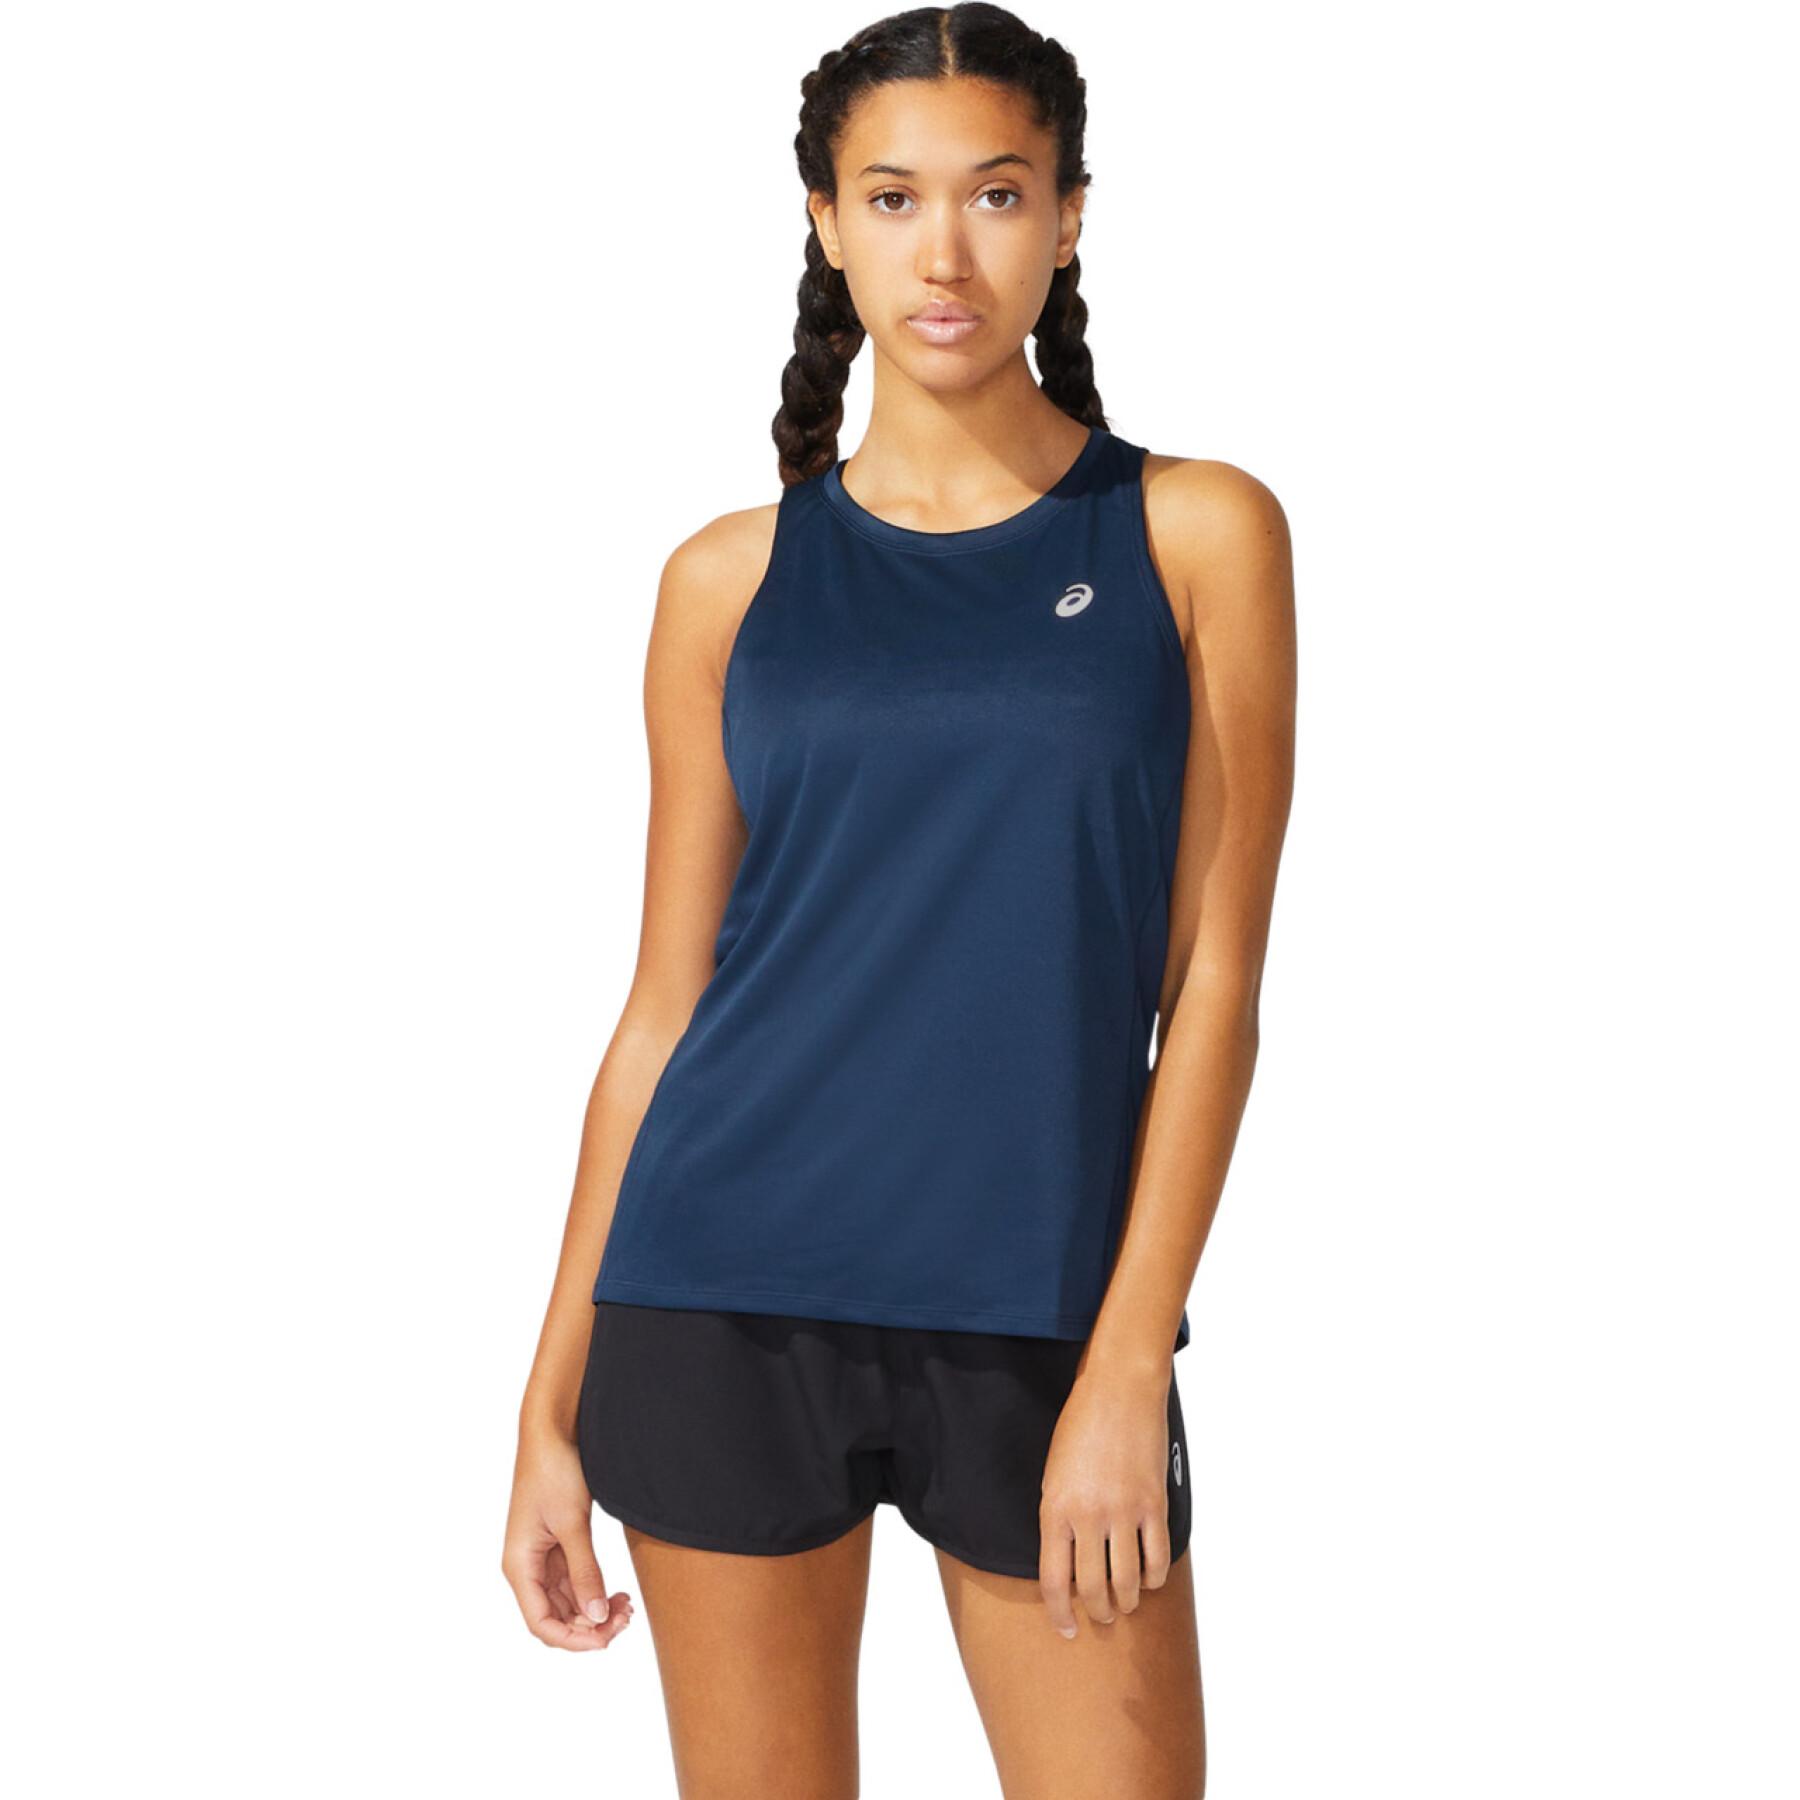 Women\'s tank top Asics - Jerseys Women\'s Running and - Core t-shirts textiles 